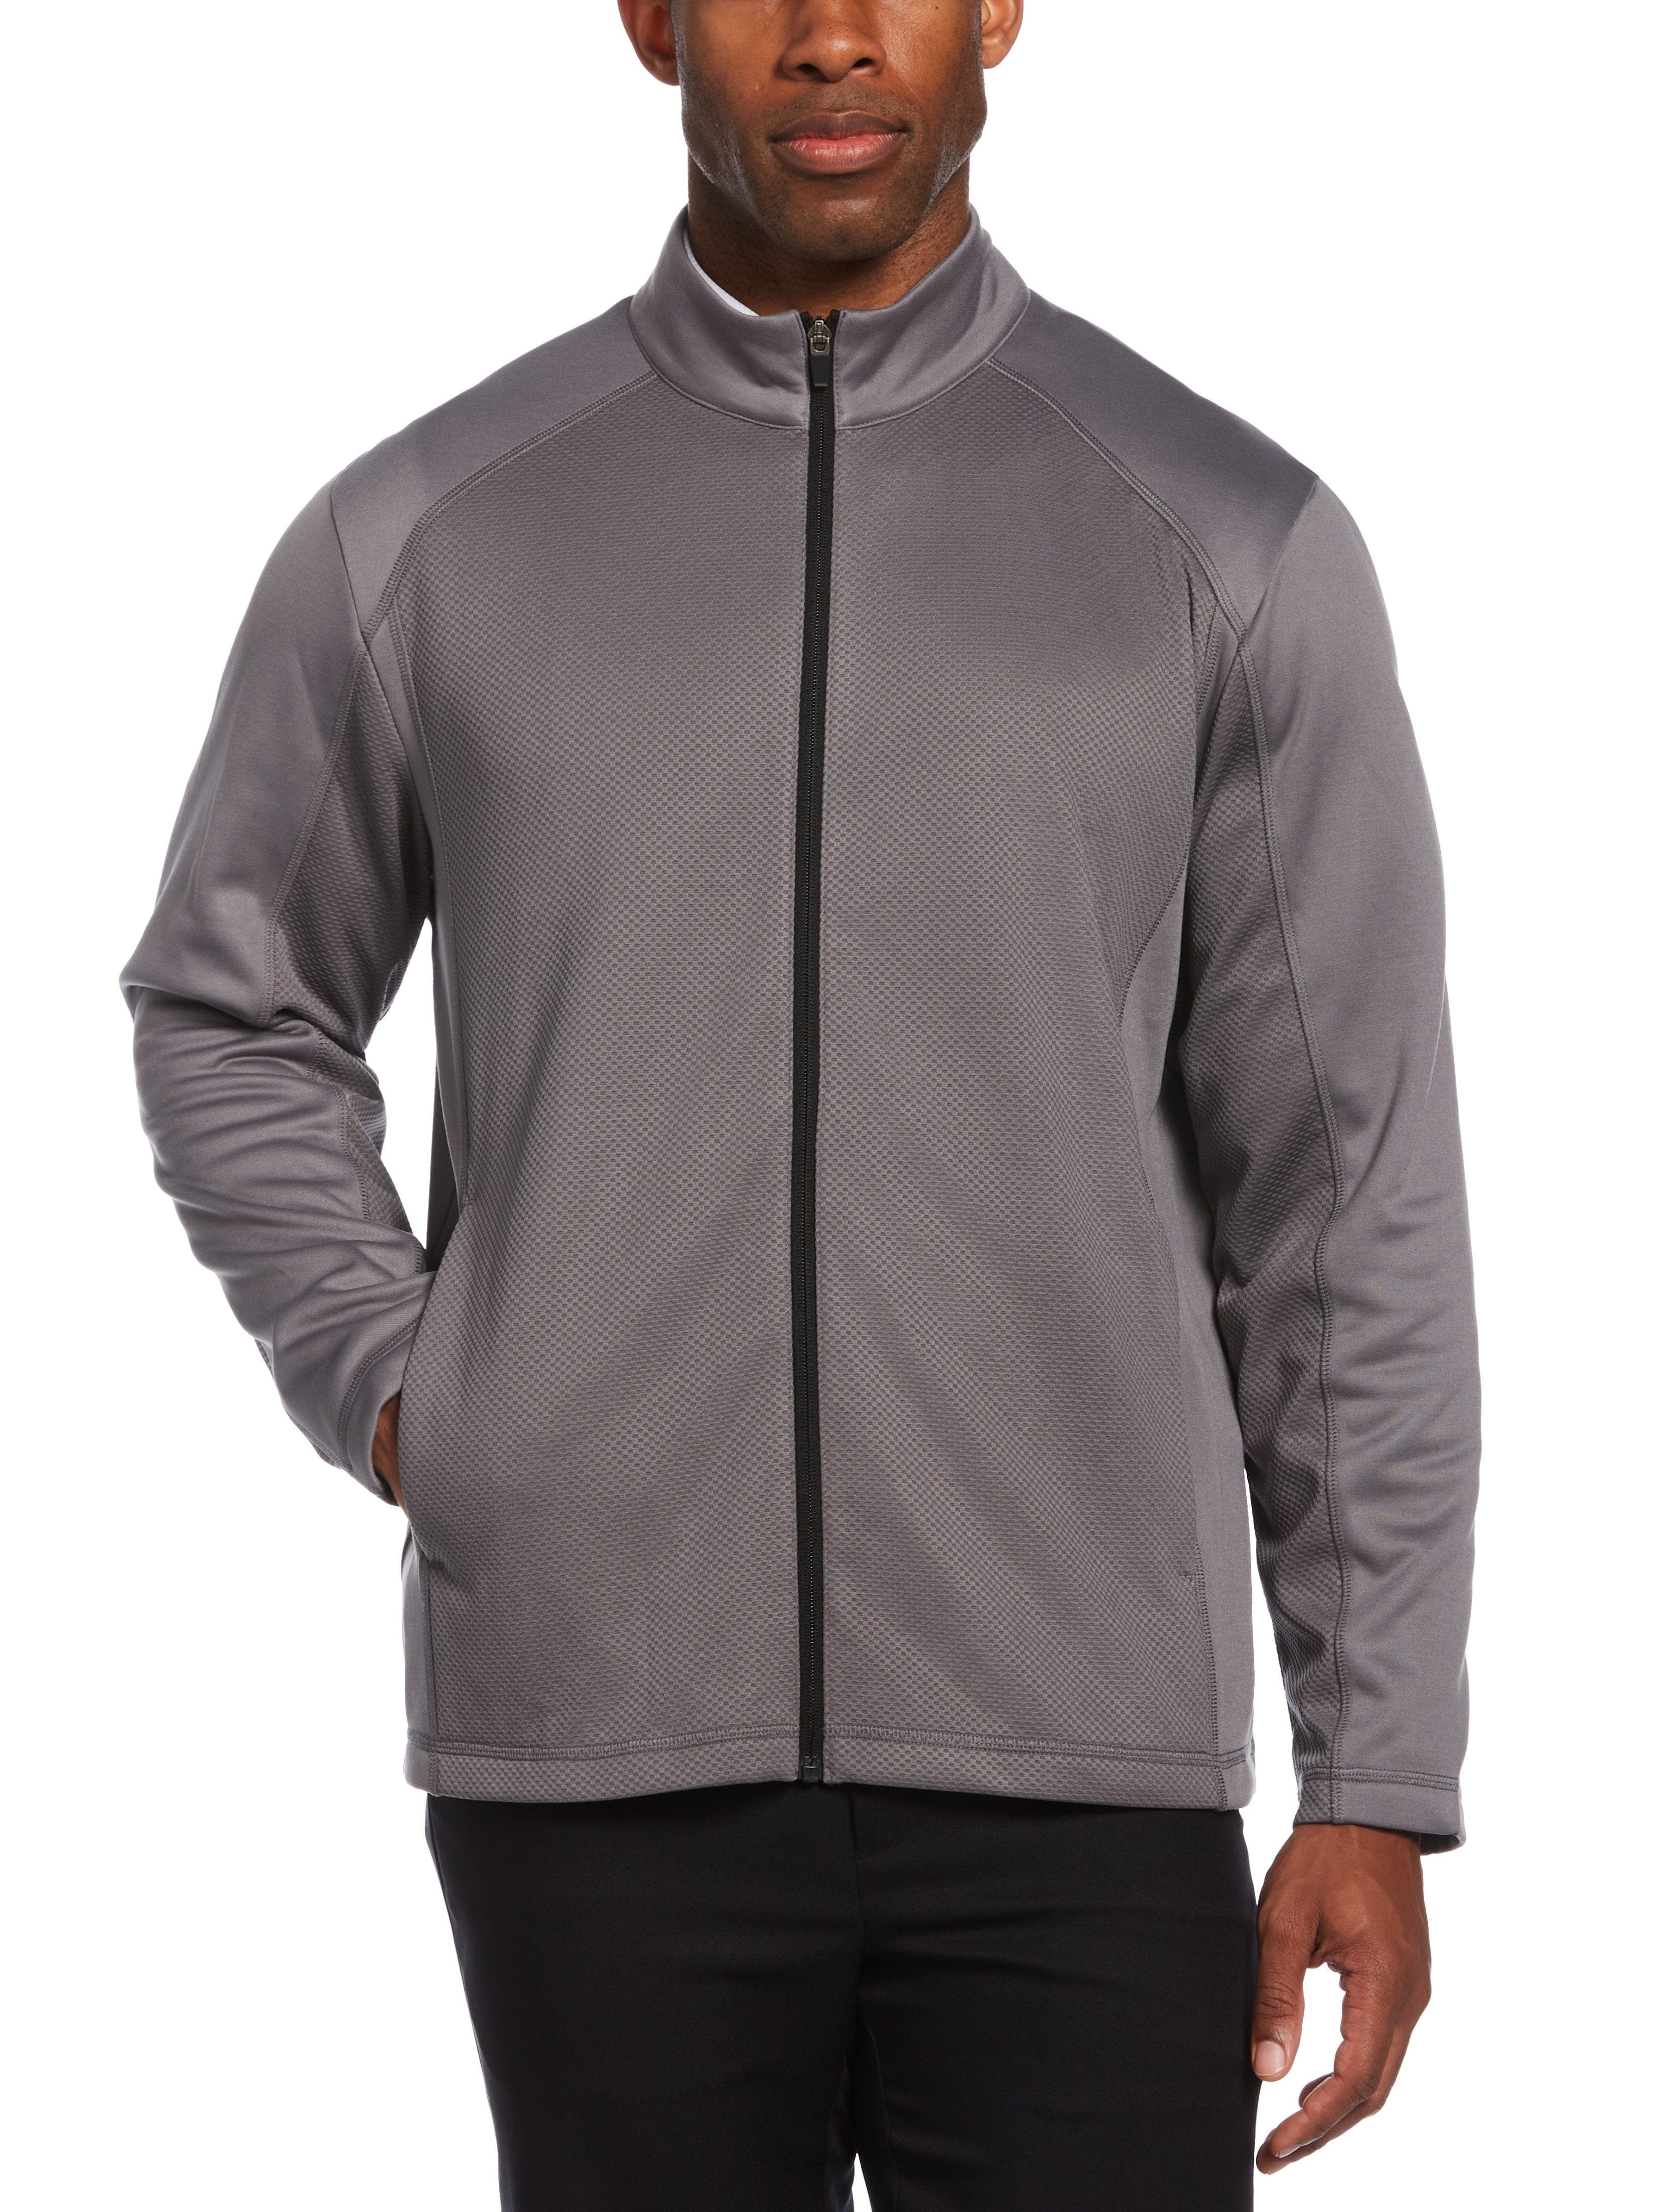 PGA TOUR Apparel Mens Mixed Texture Fleece Golf Jacket Top, Size 2XL, Quiet Shade Gray, 100% Polyester | Golf Apparel Shop